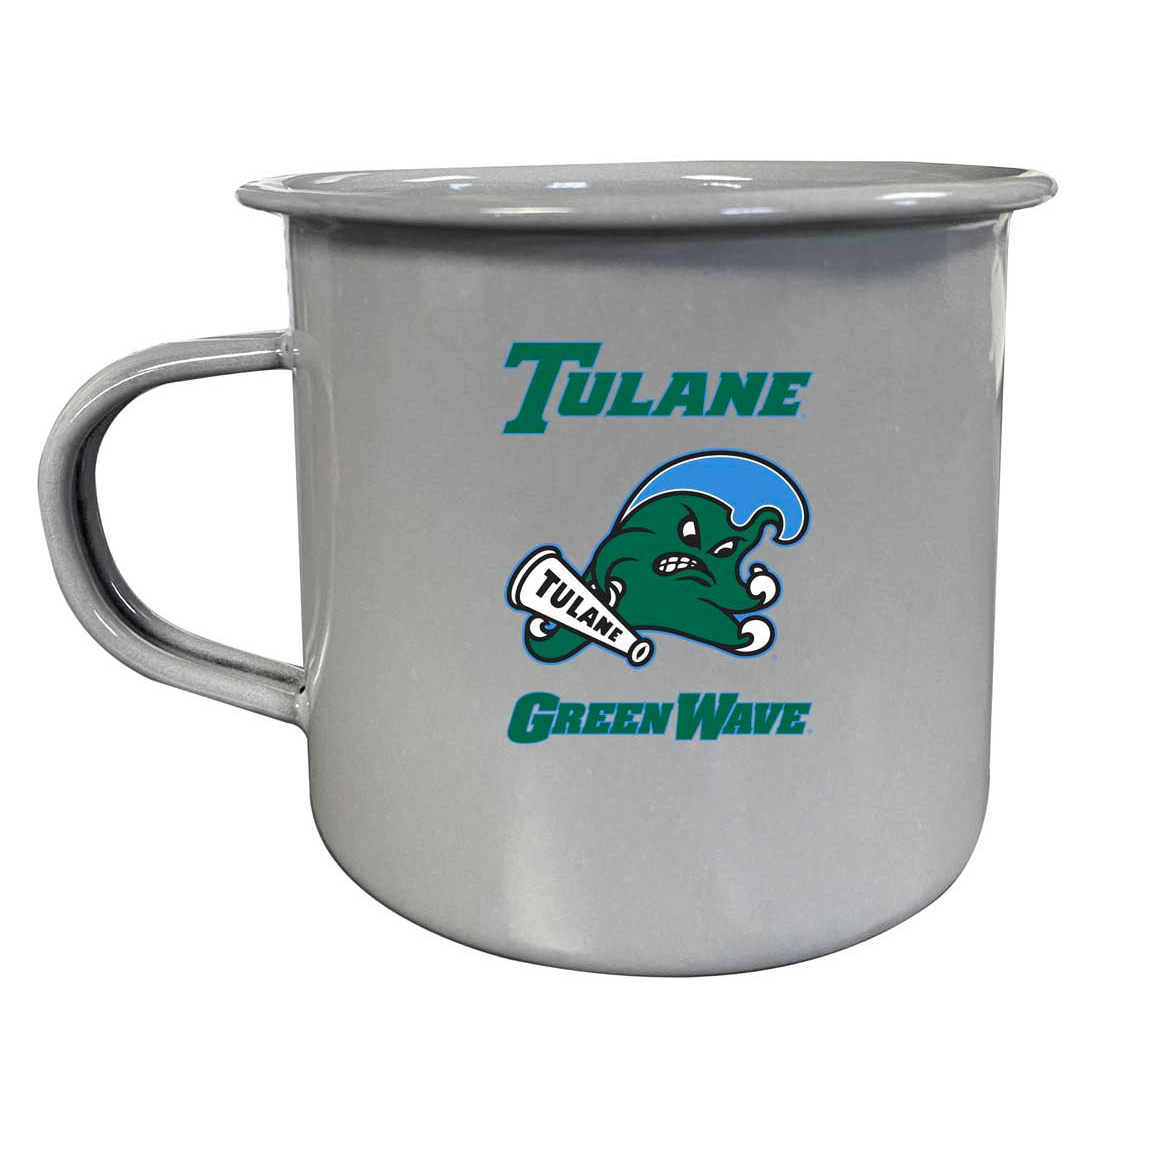 Tulane University Green Wave Tin Camper Coffee Mug - Choose Your Color - Gray